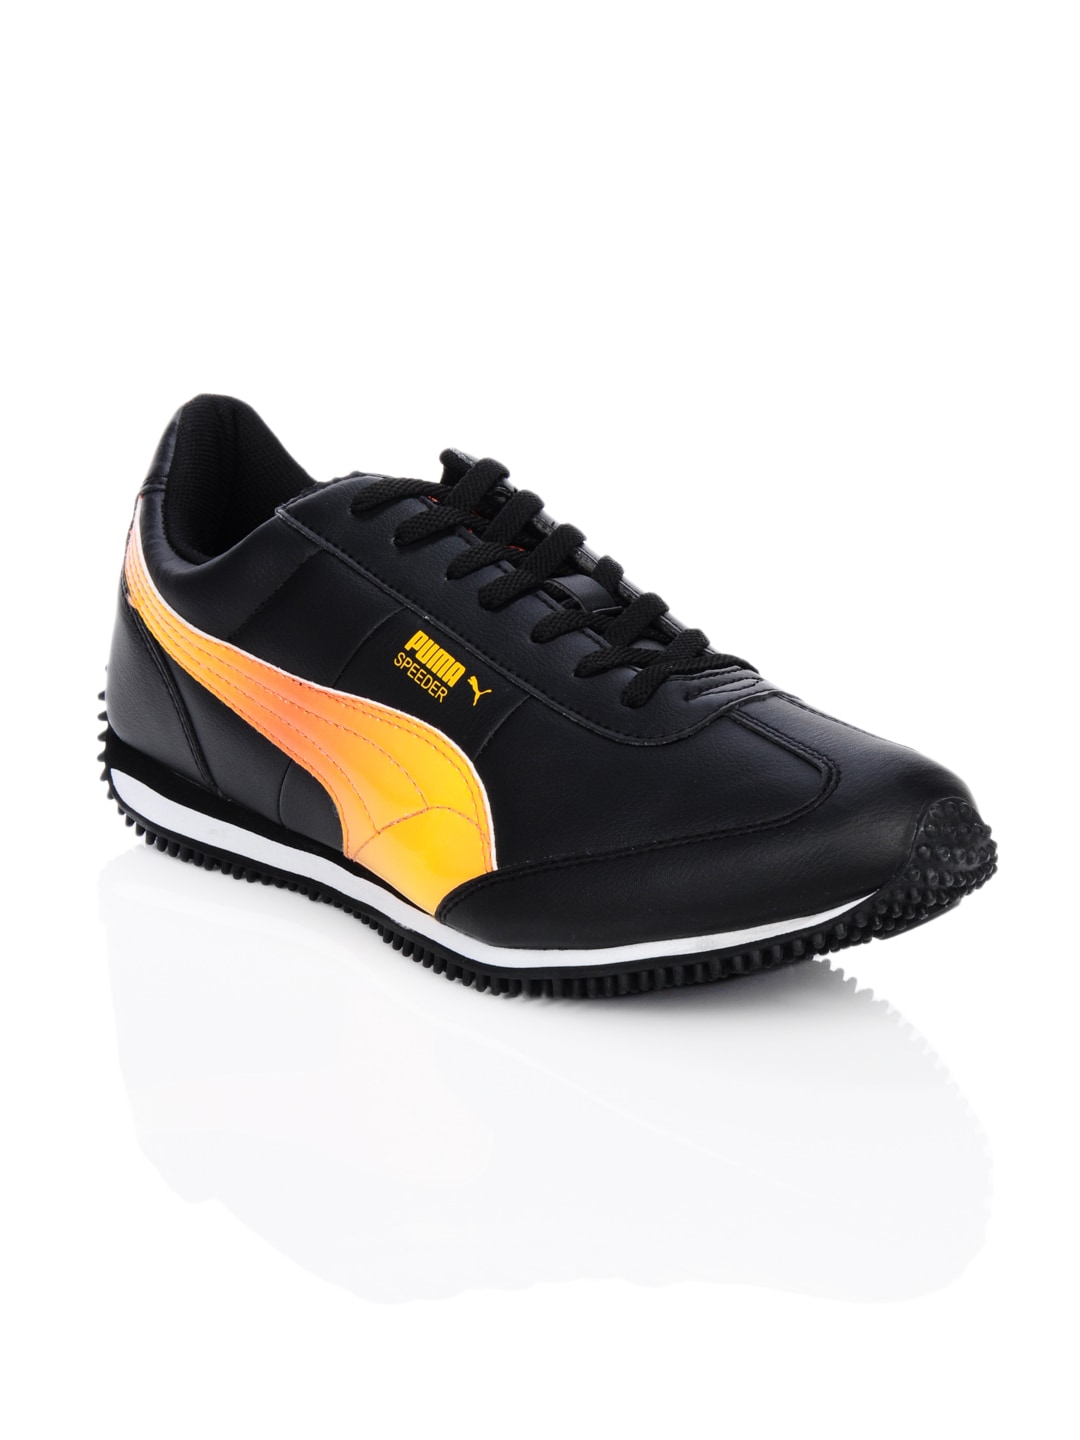 Puma Men Speeder Black Sports Shoes